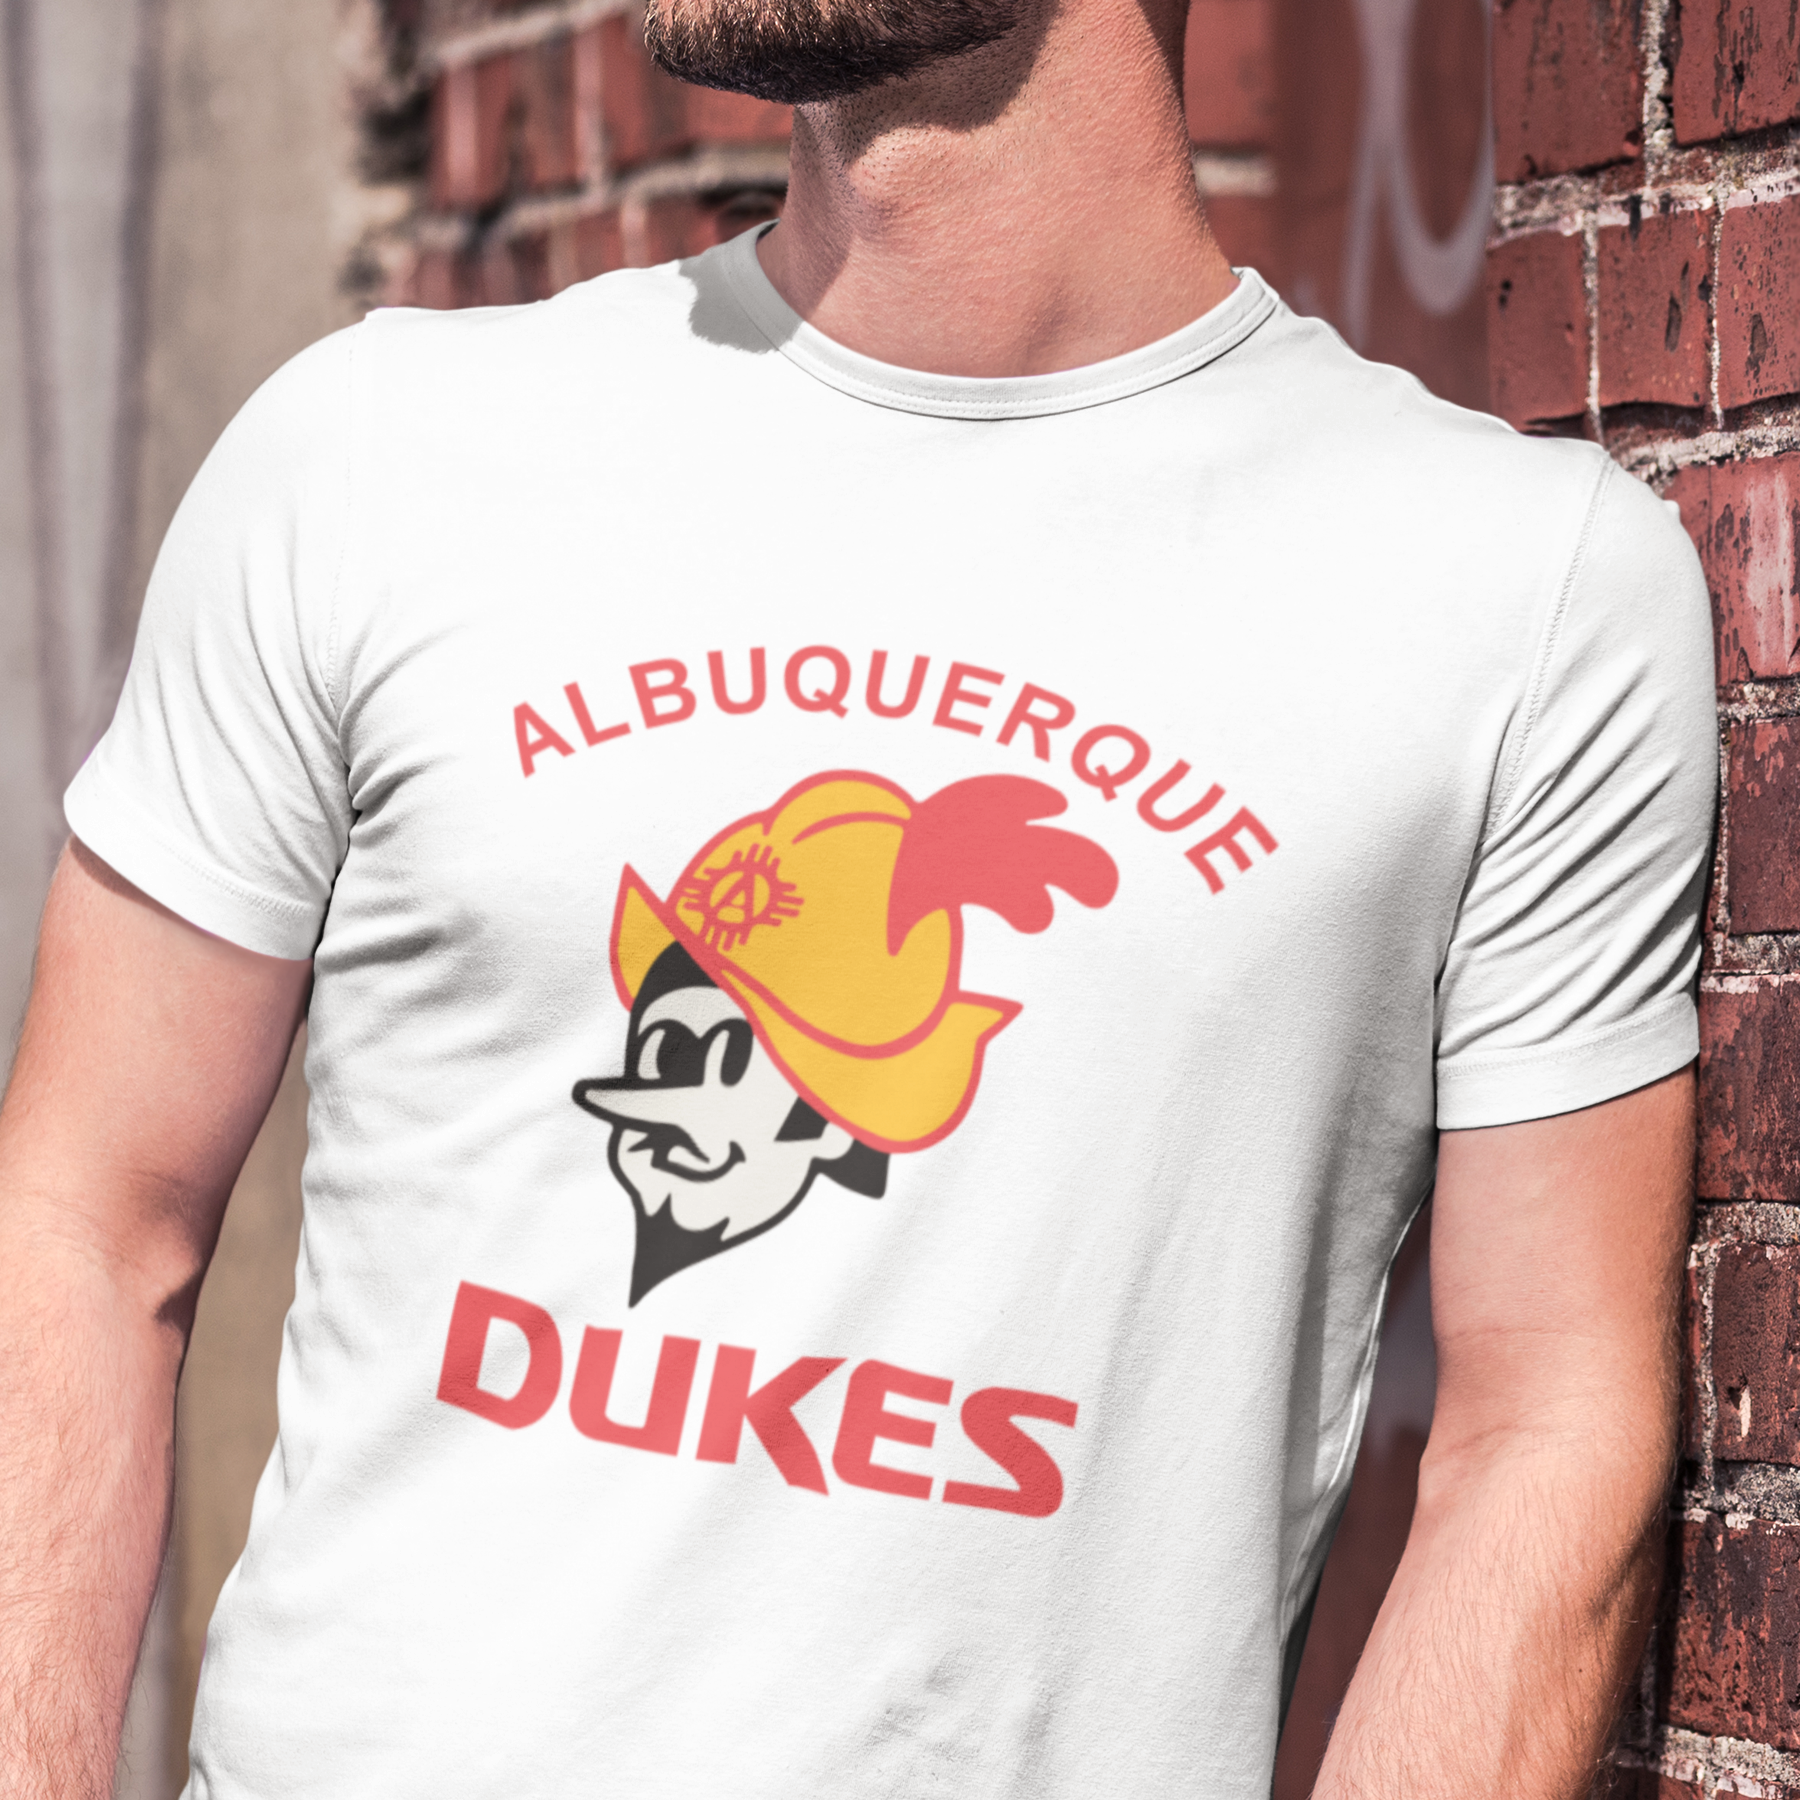 Albuquerque Dukes minor league baseball t shirt